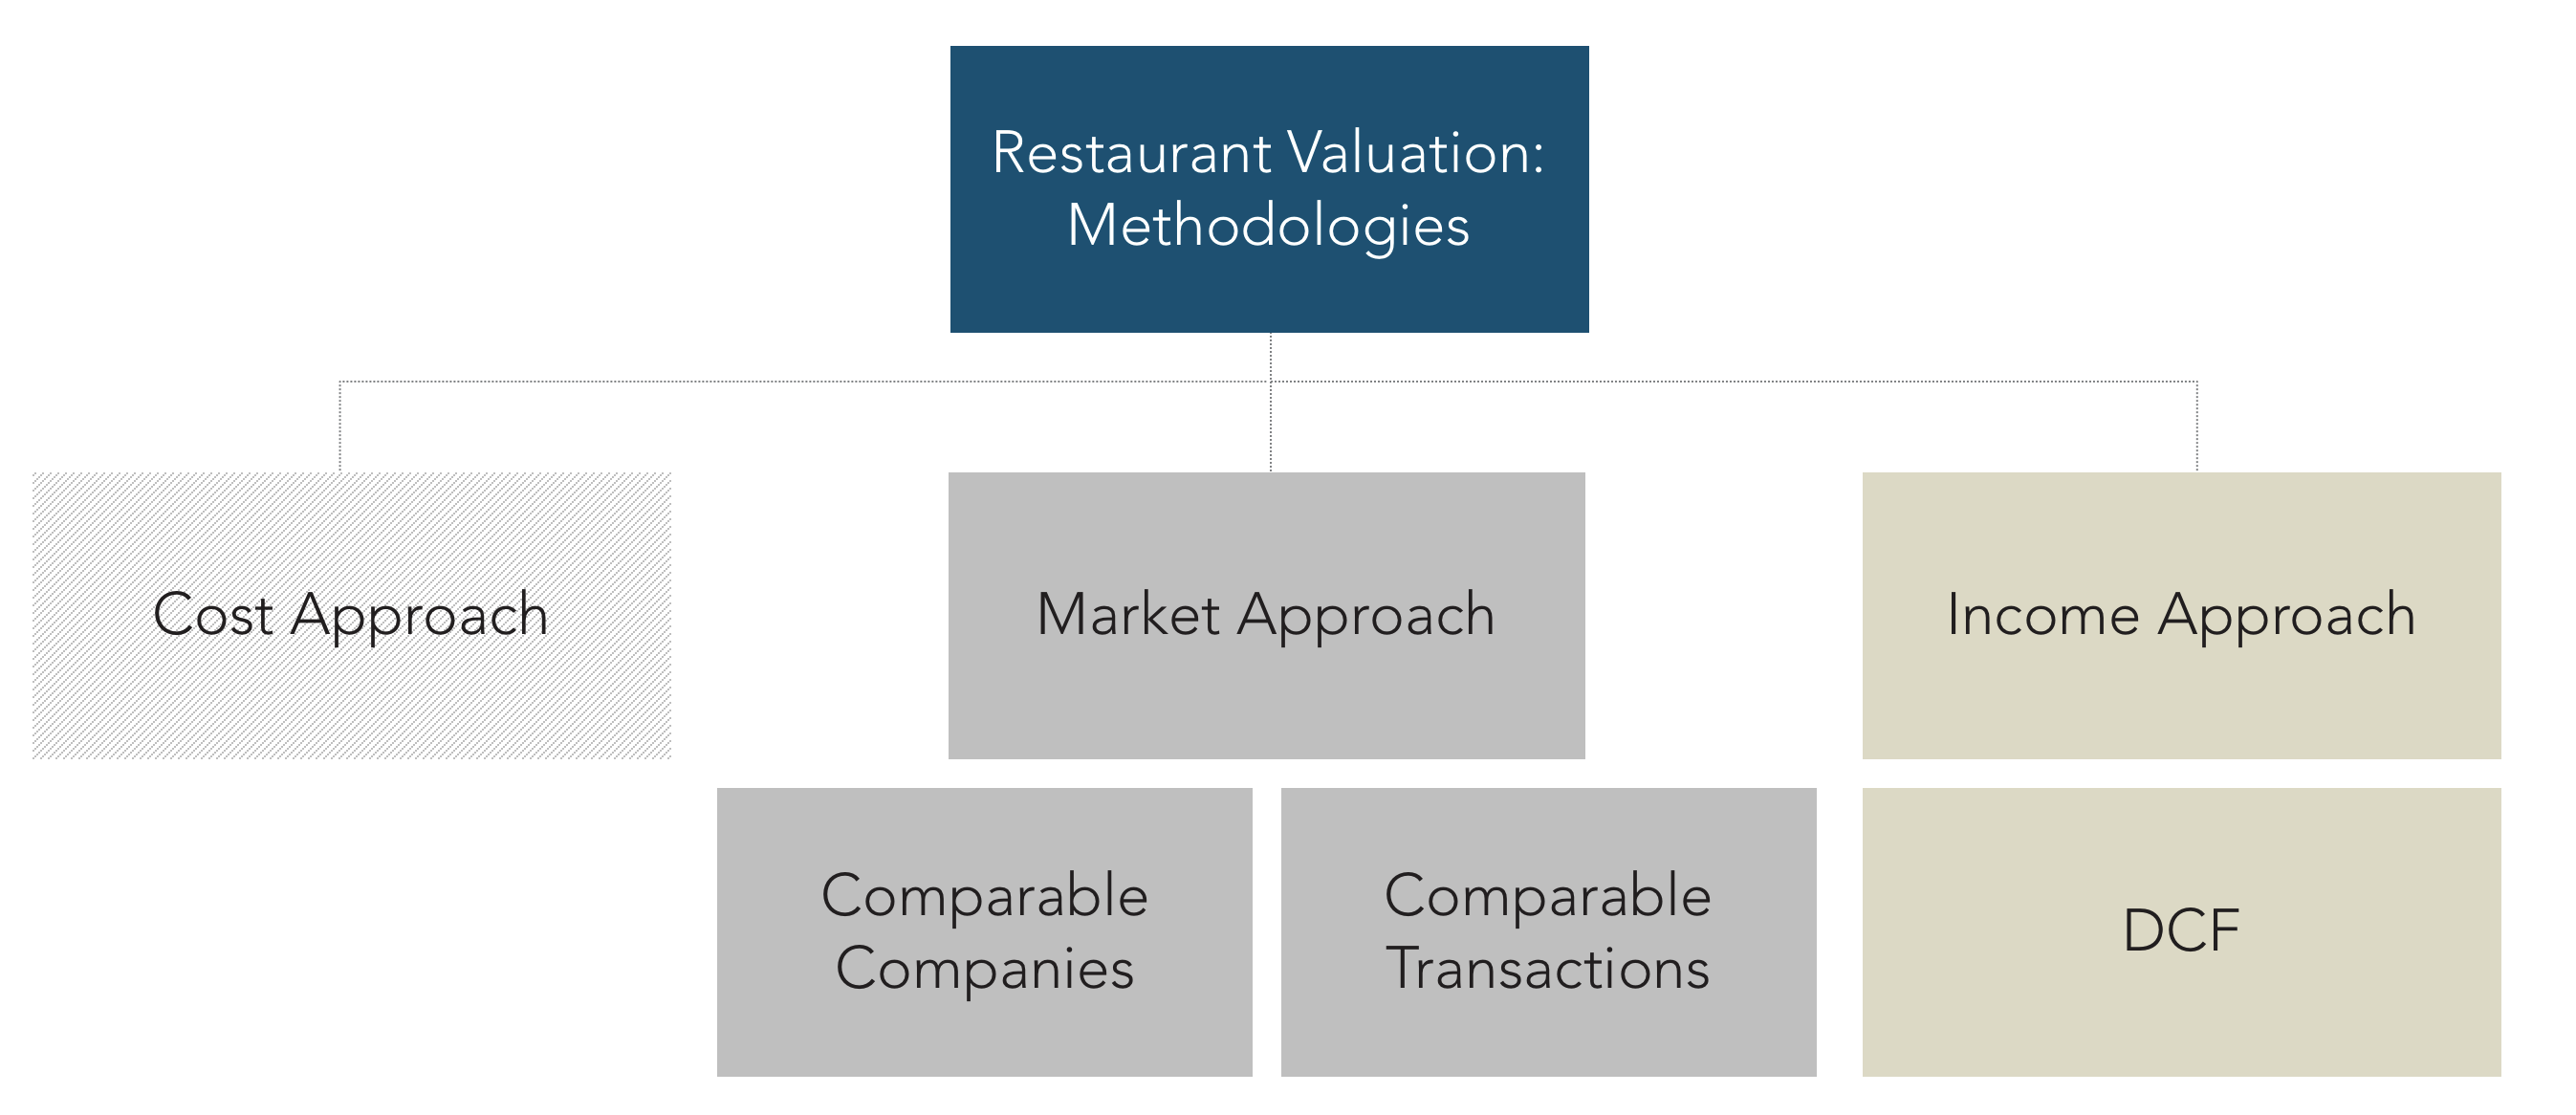 Restaurant Valuation Methodologies